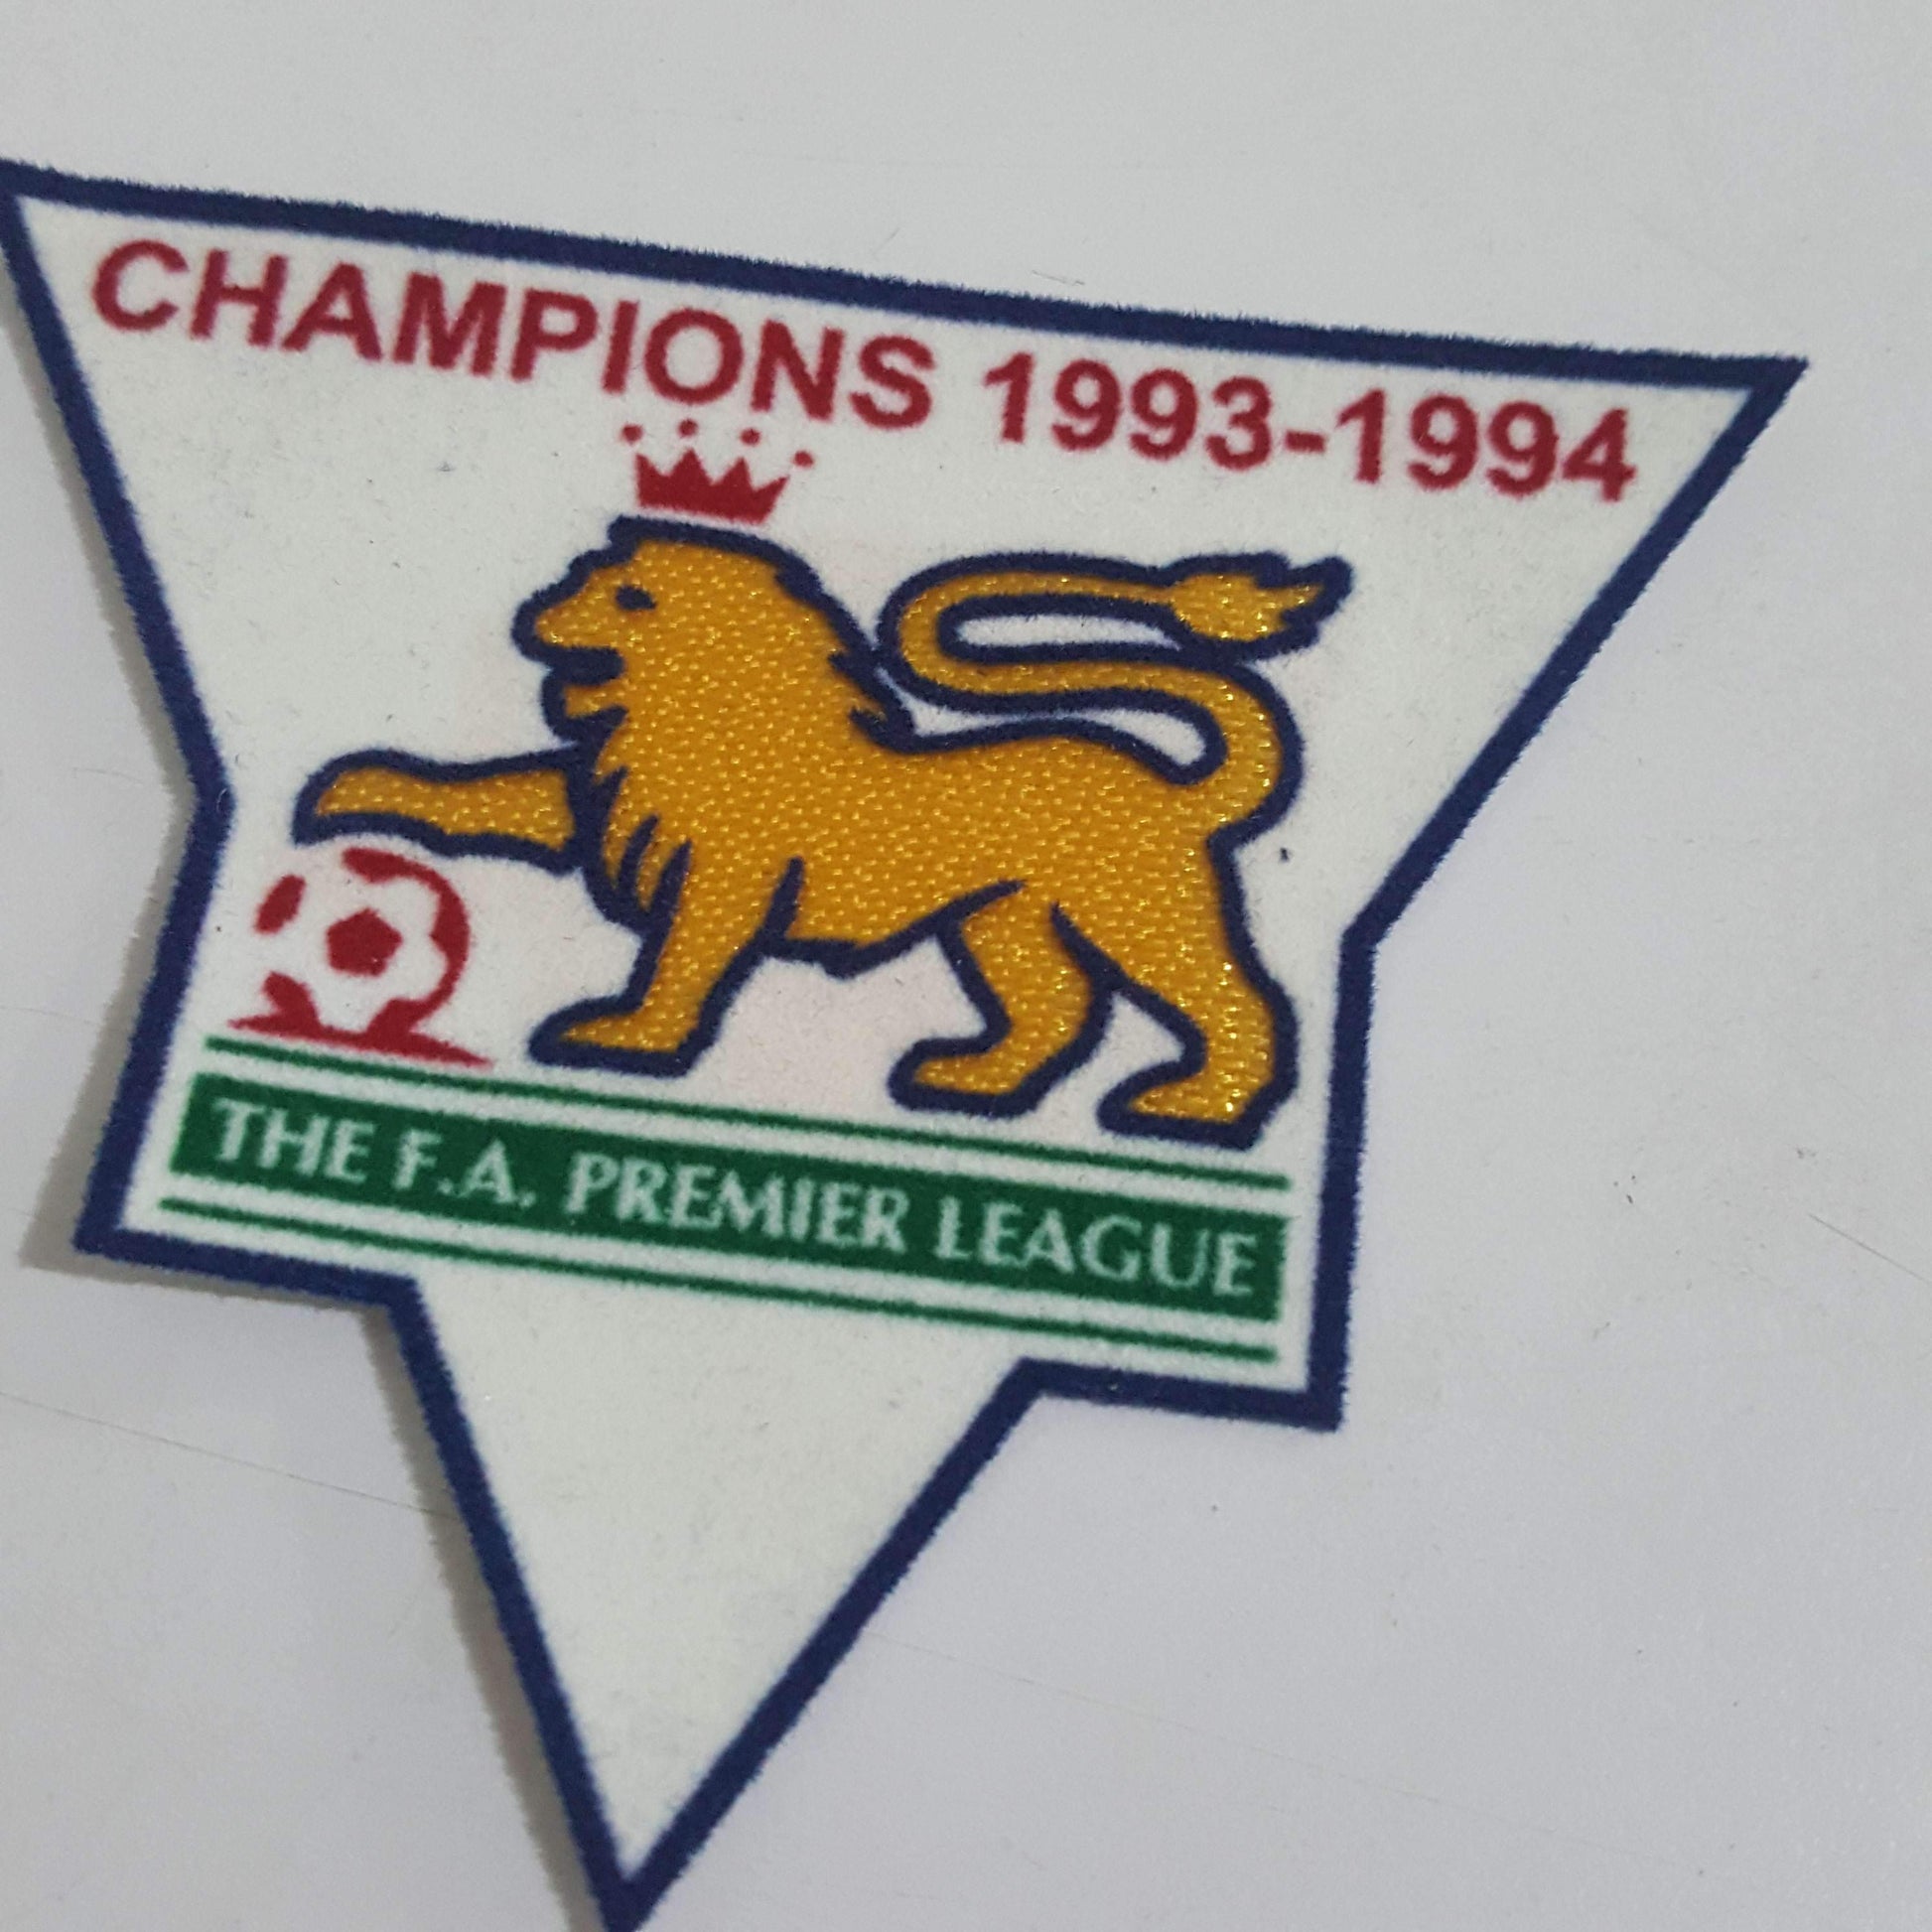 1993/94 F.A Premier League Champions Patch - ClassicFootballJersey